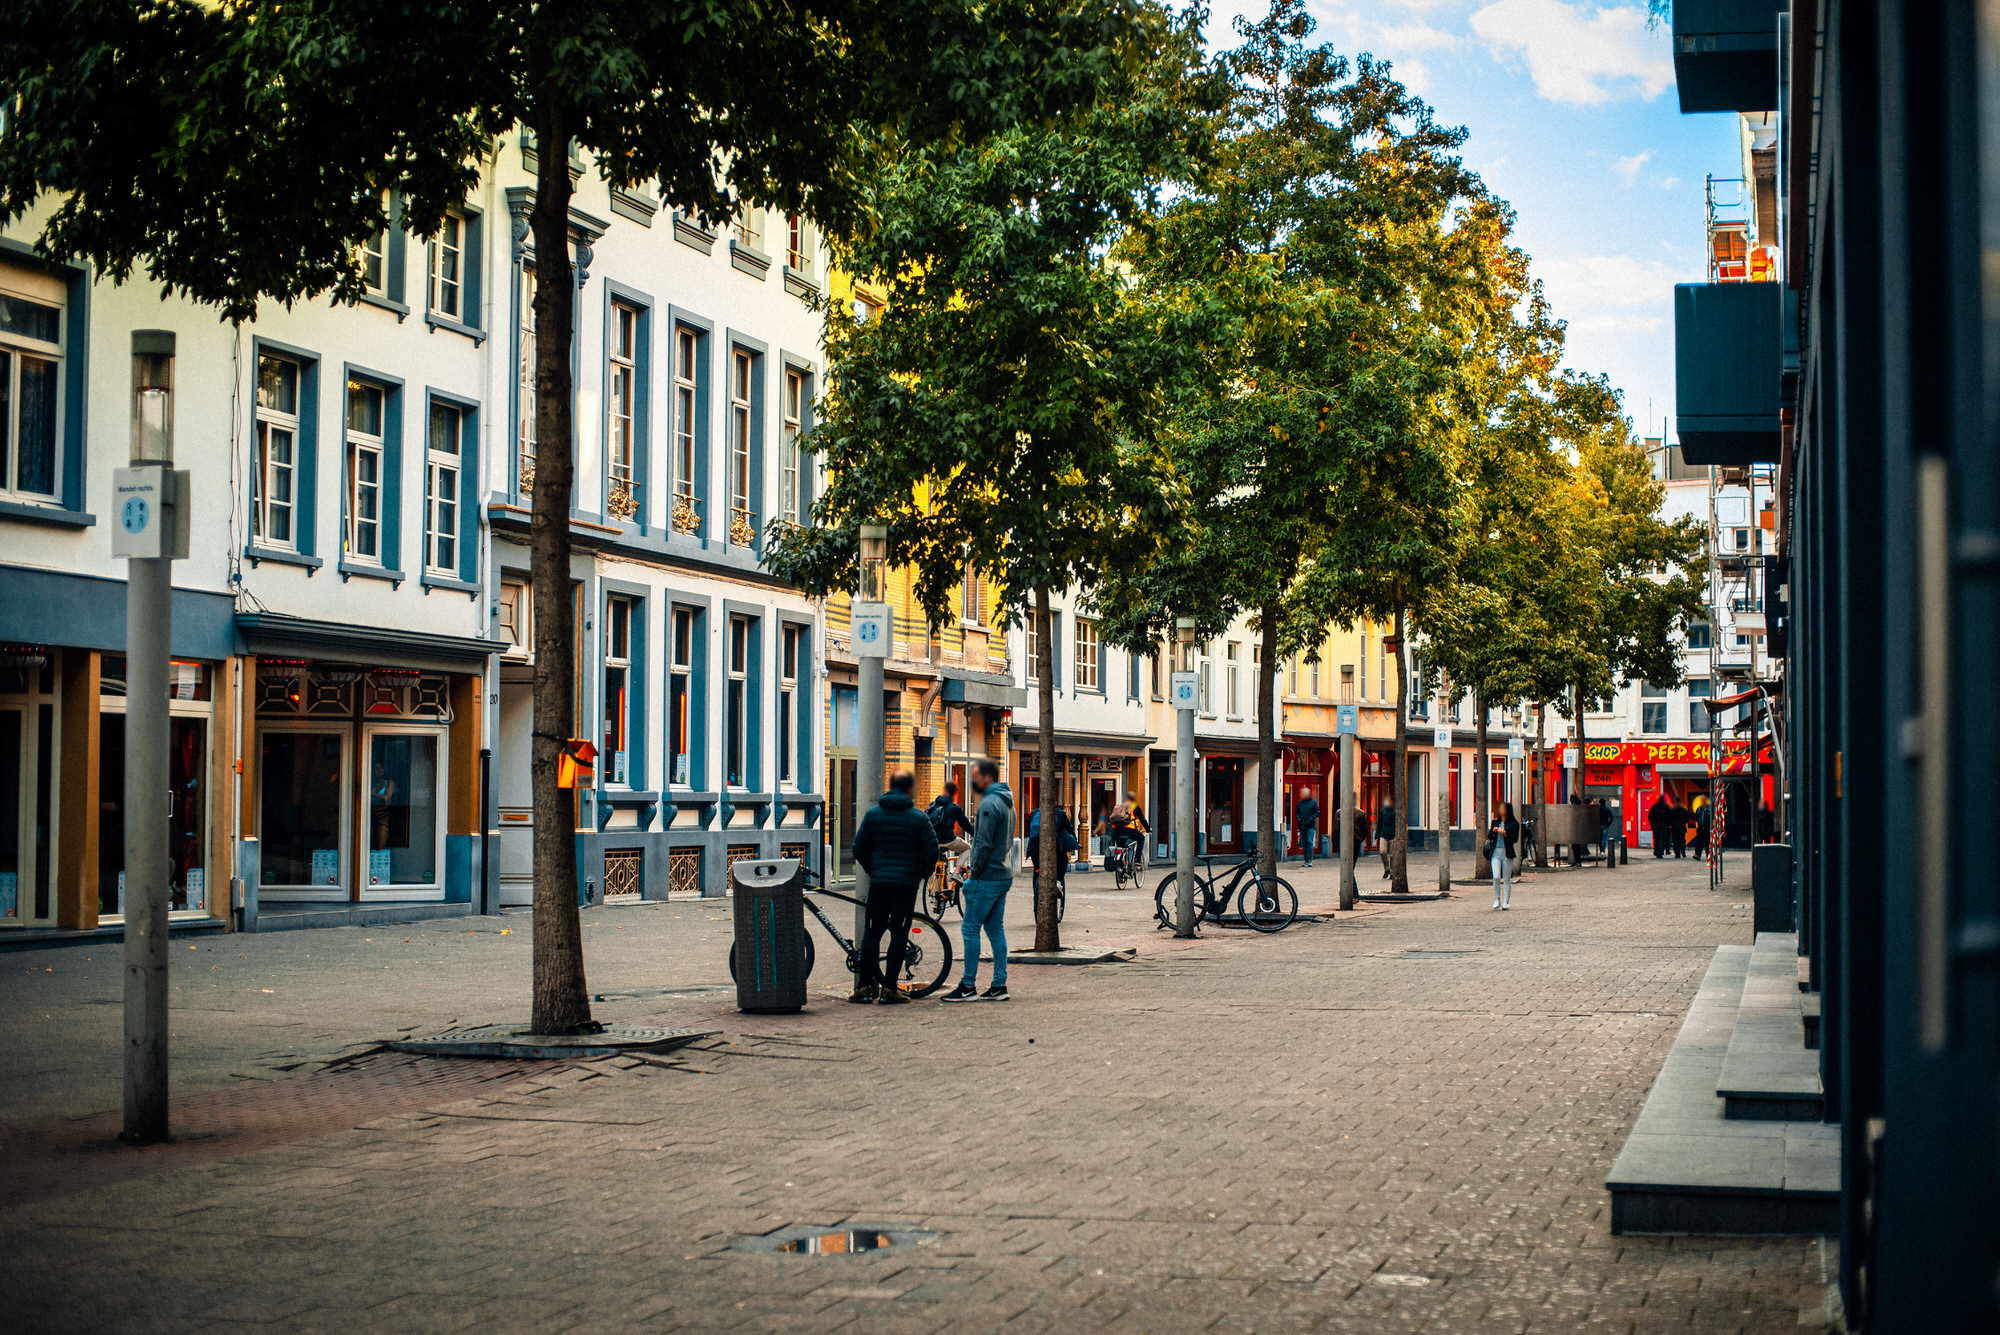 Seamen’s quarter: Antwerp’s red light district